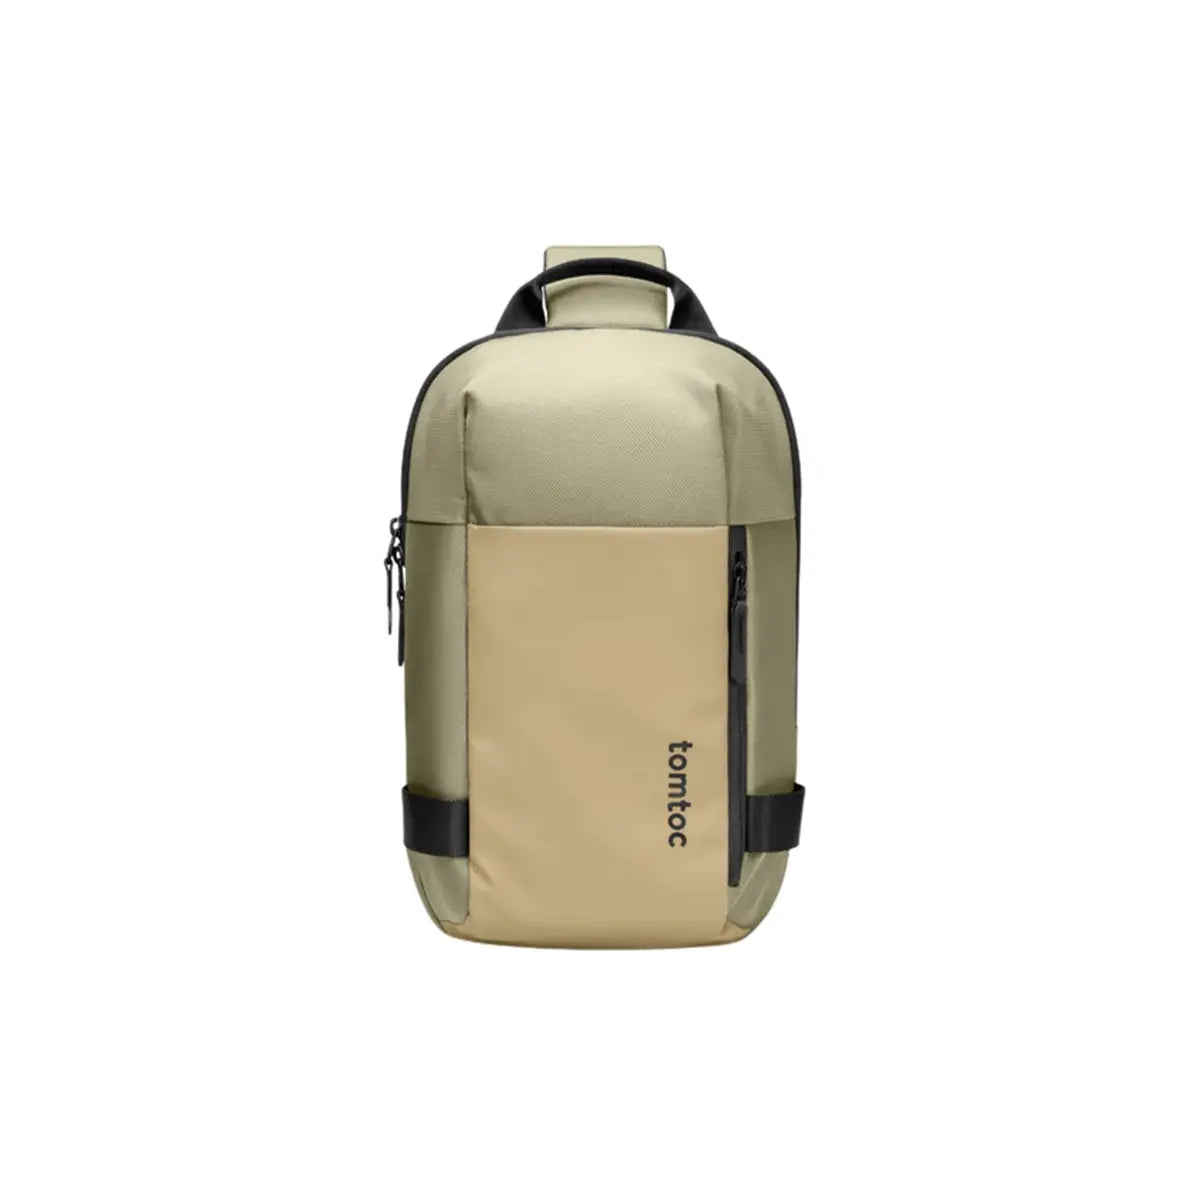 Tomtoc Explorer-A54 CroxBody EDC Sling Bag